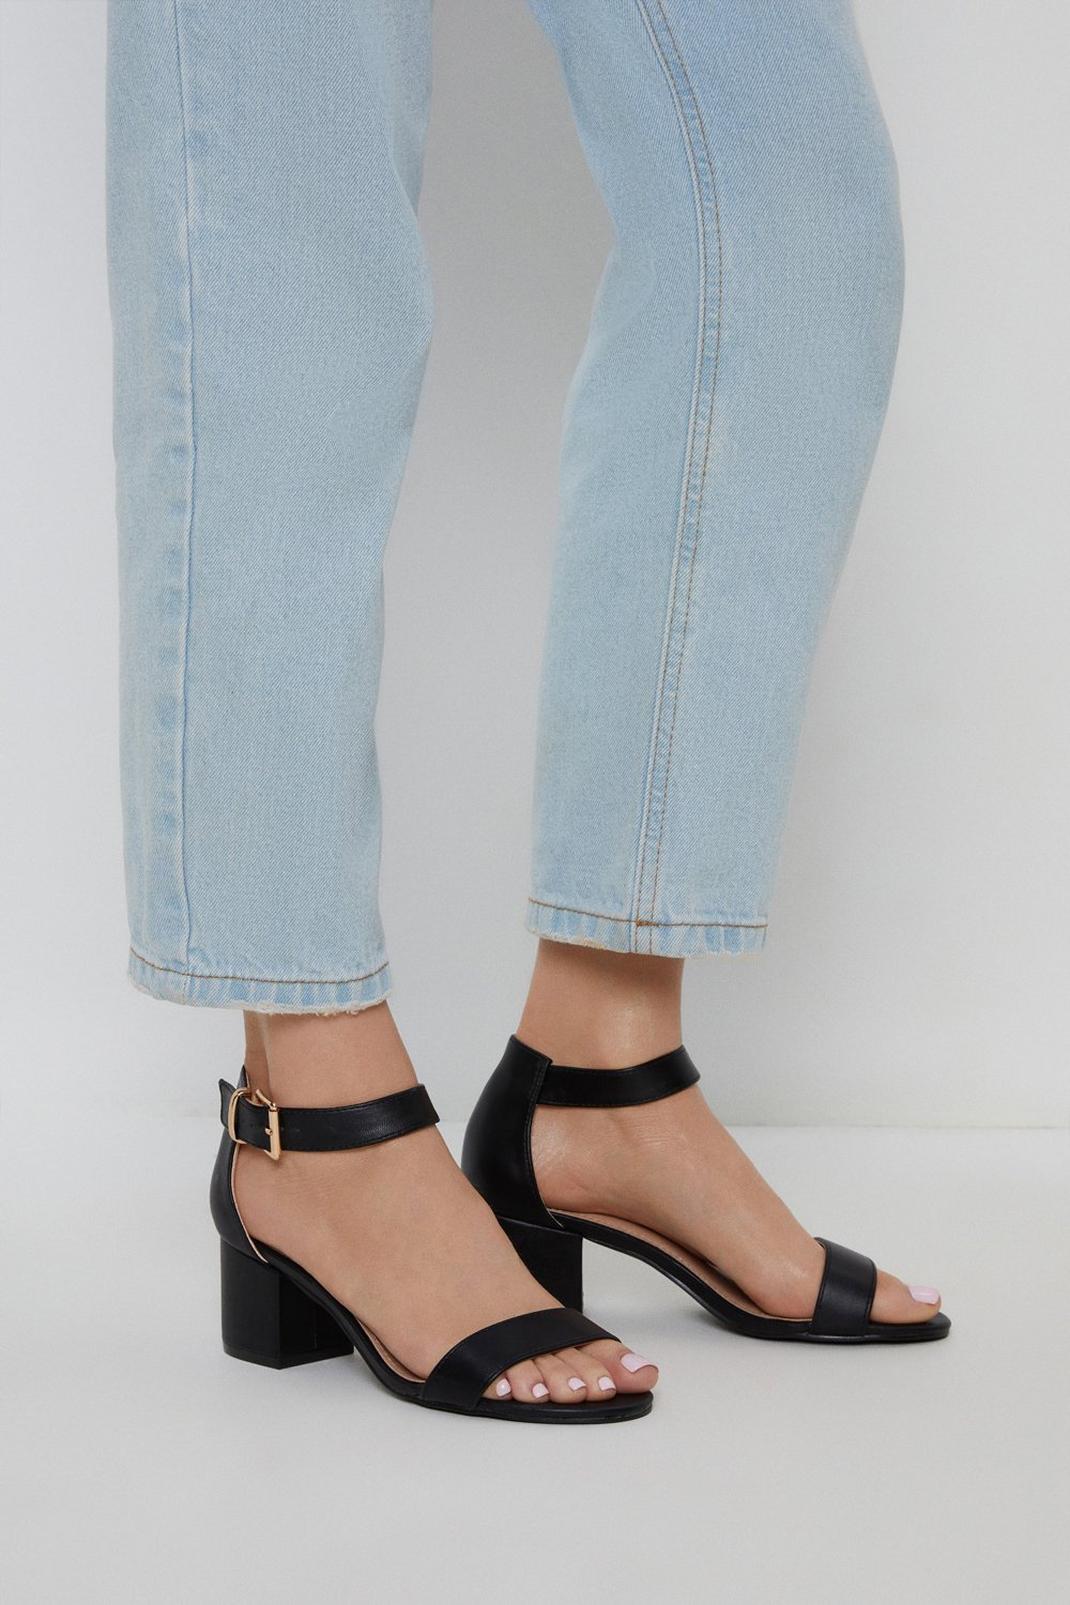 ILLUDE Women’s Block Heel Double Band Square Toe Heeled Sandal Slip On Shoes 